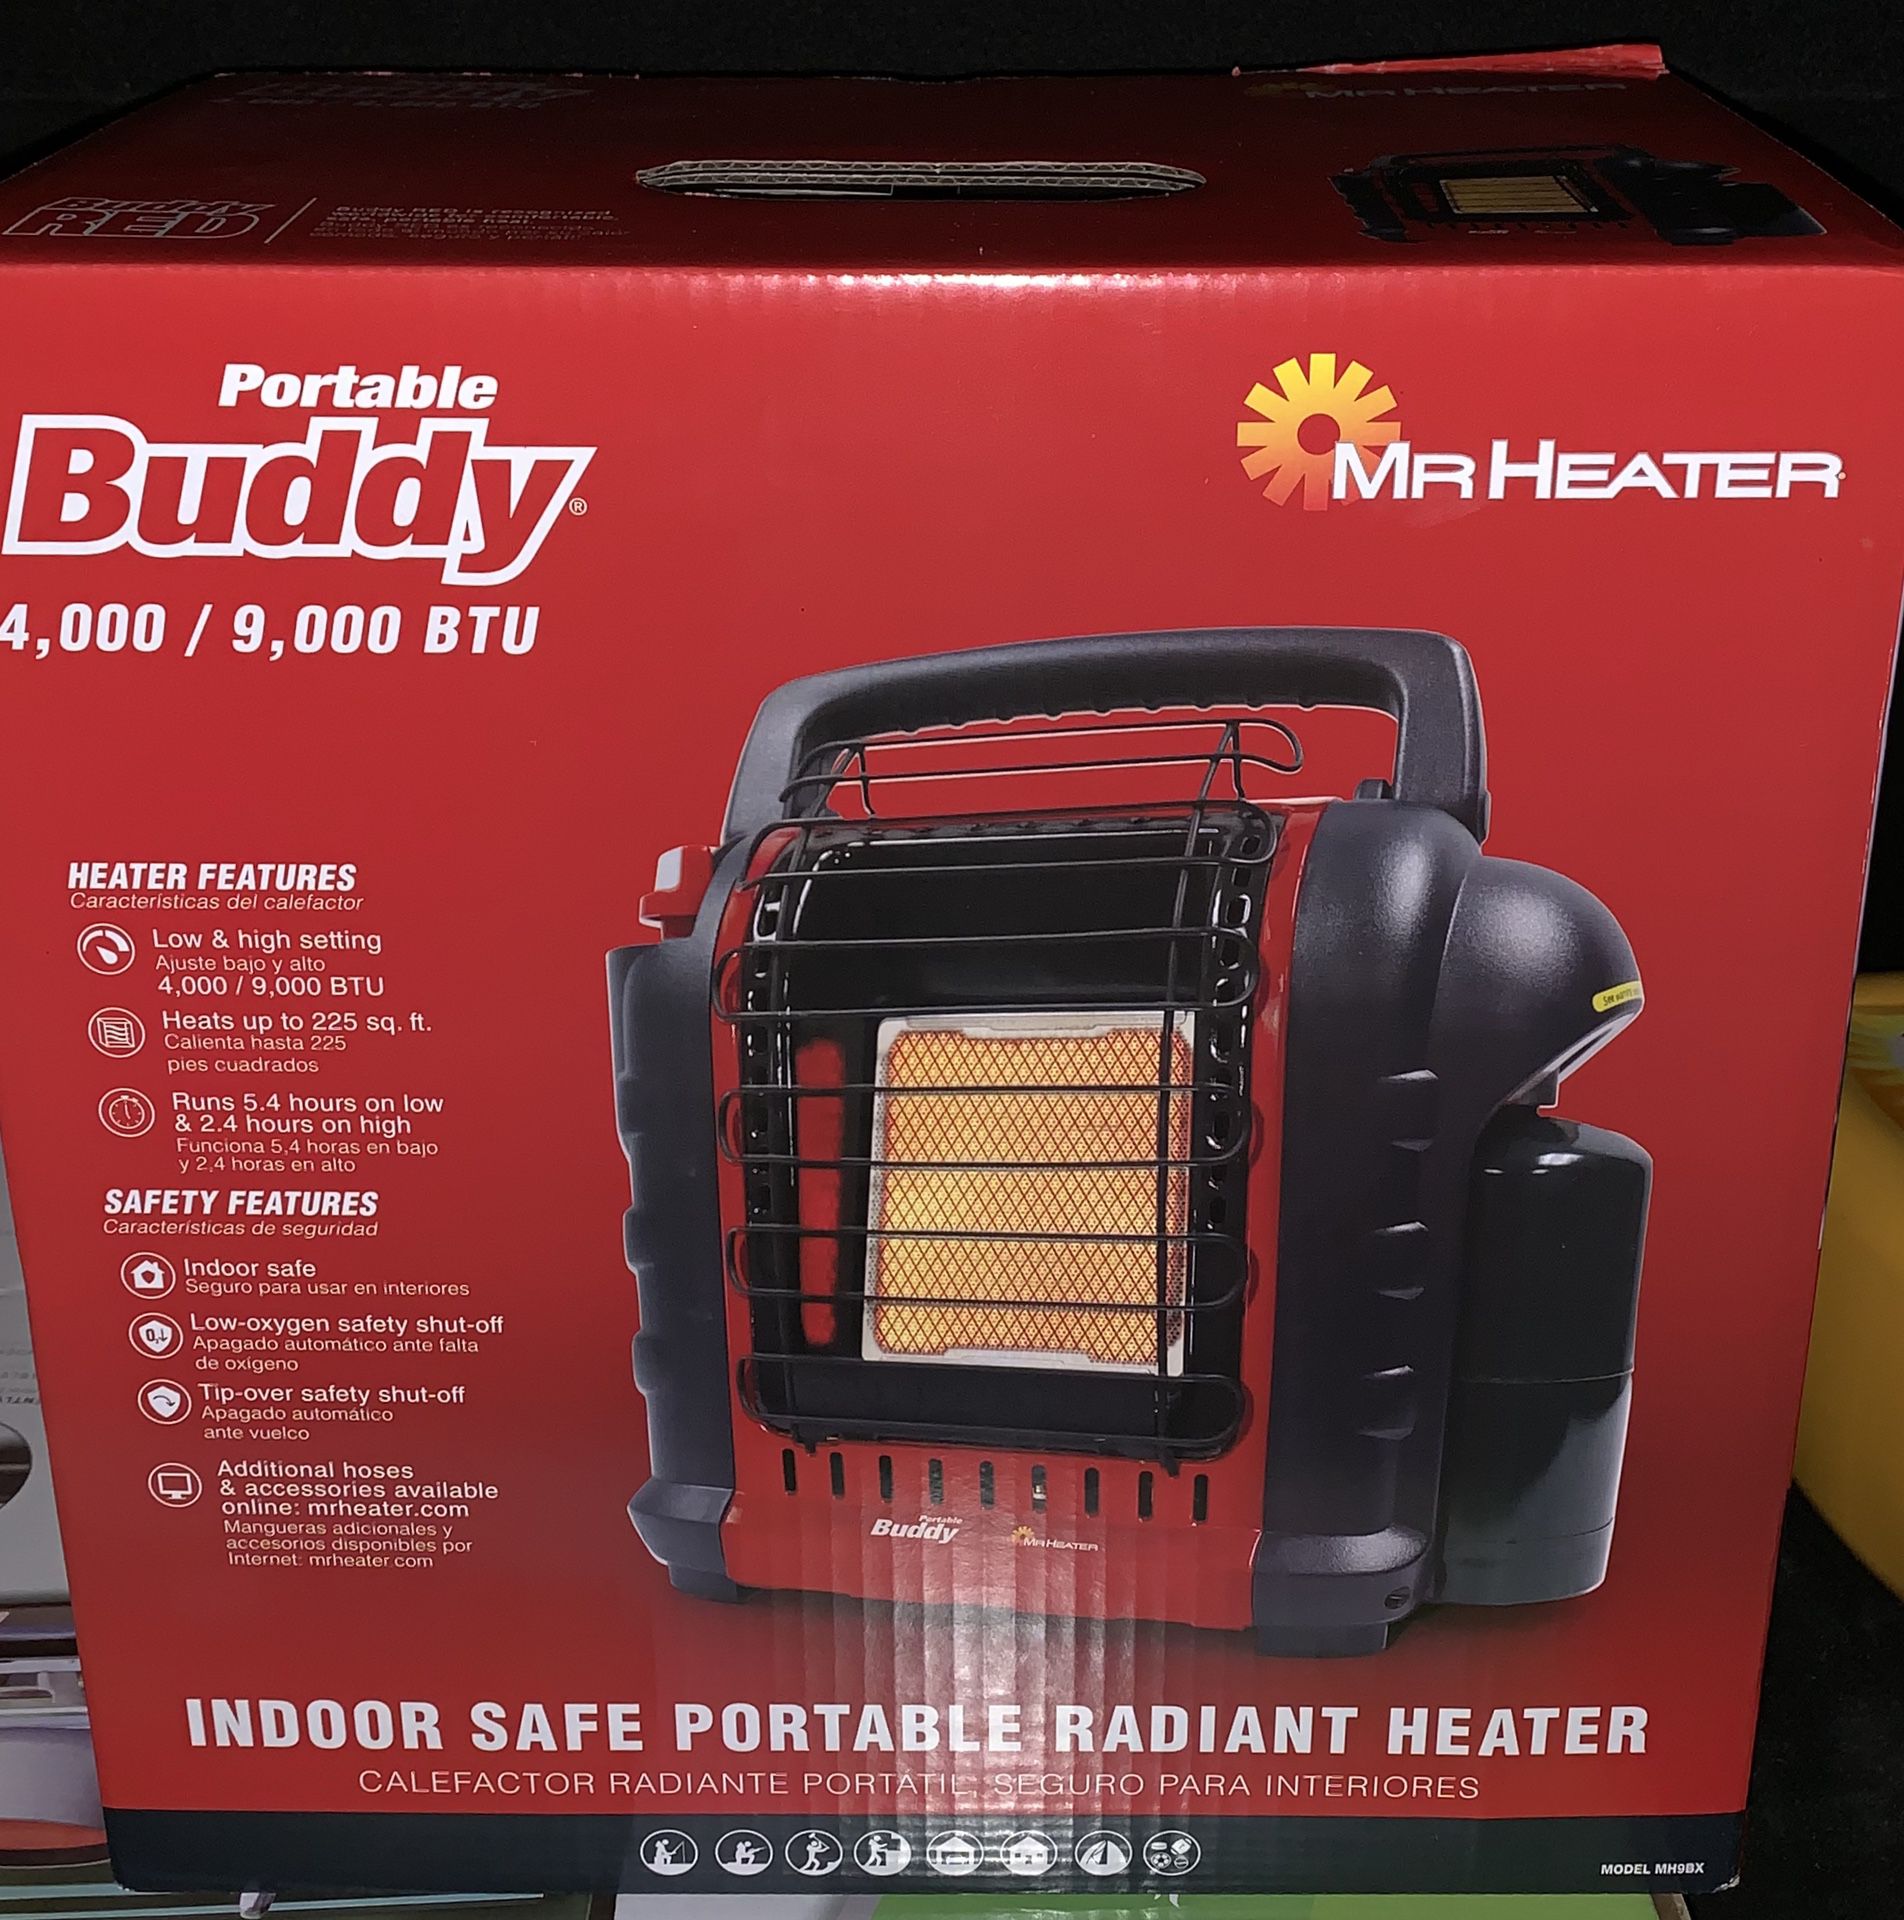 Me Heater portable buddy 9,000 btu